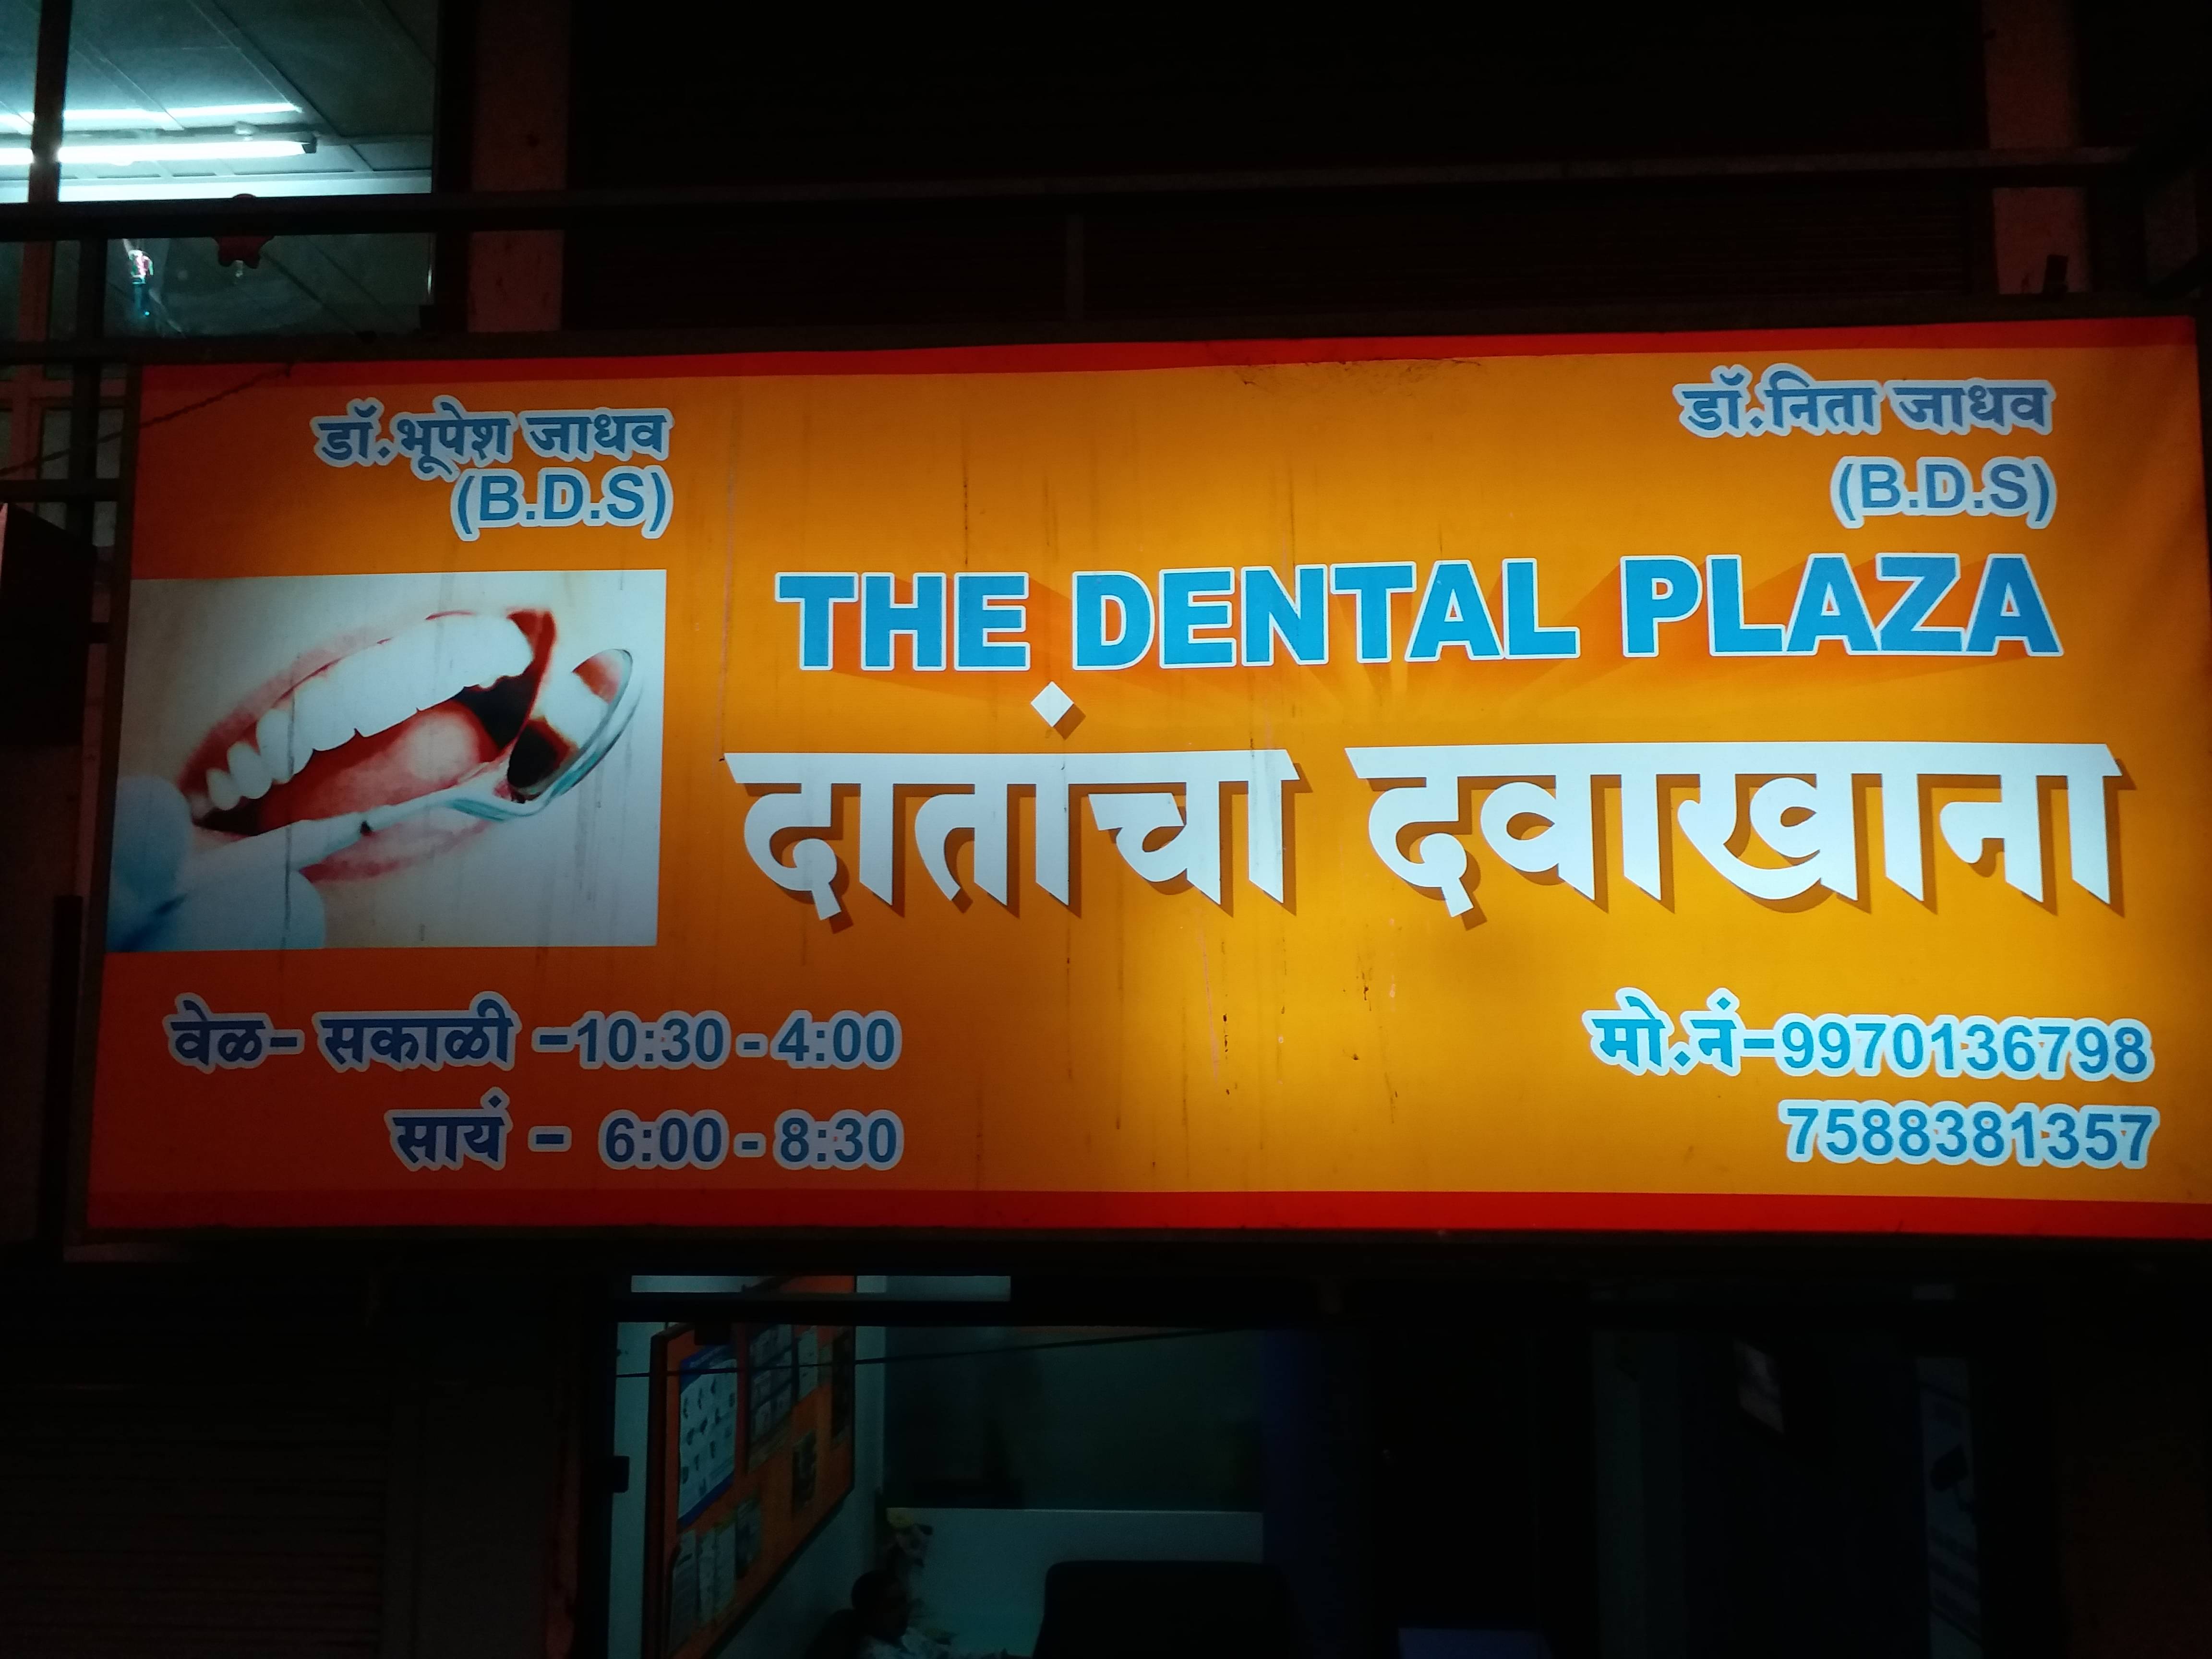 The Dental Plaza Clinic - Dr. Bhupesh Jadhav in Budhwar Peth, Satara - Book  Appointment, View Contact Number, Feedbacks, Address | Dr. Bhupesh Jadhav